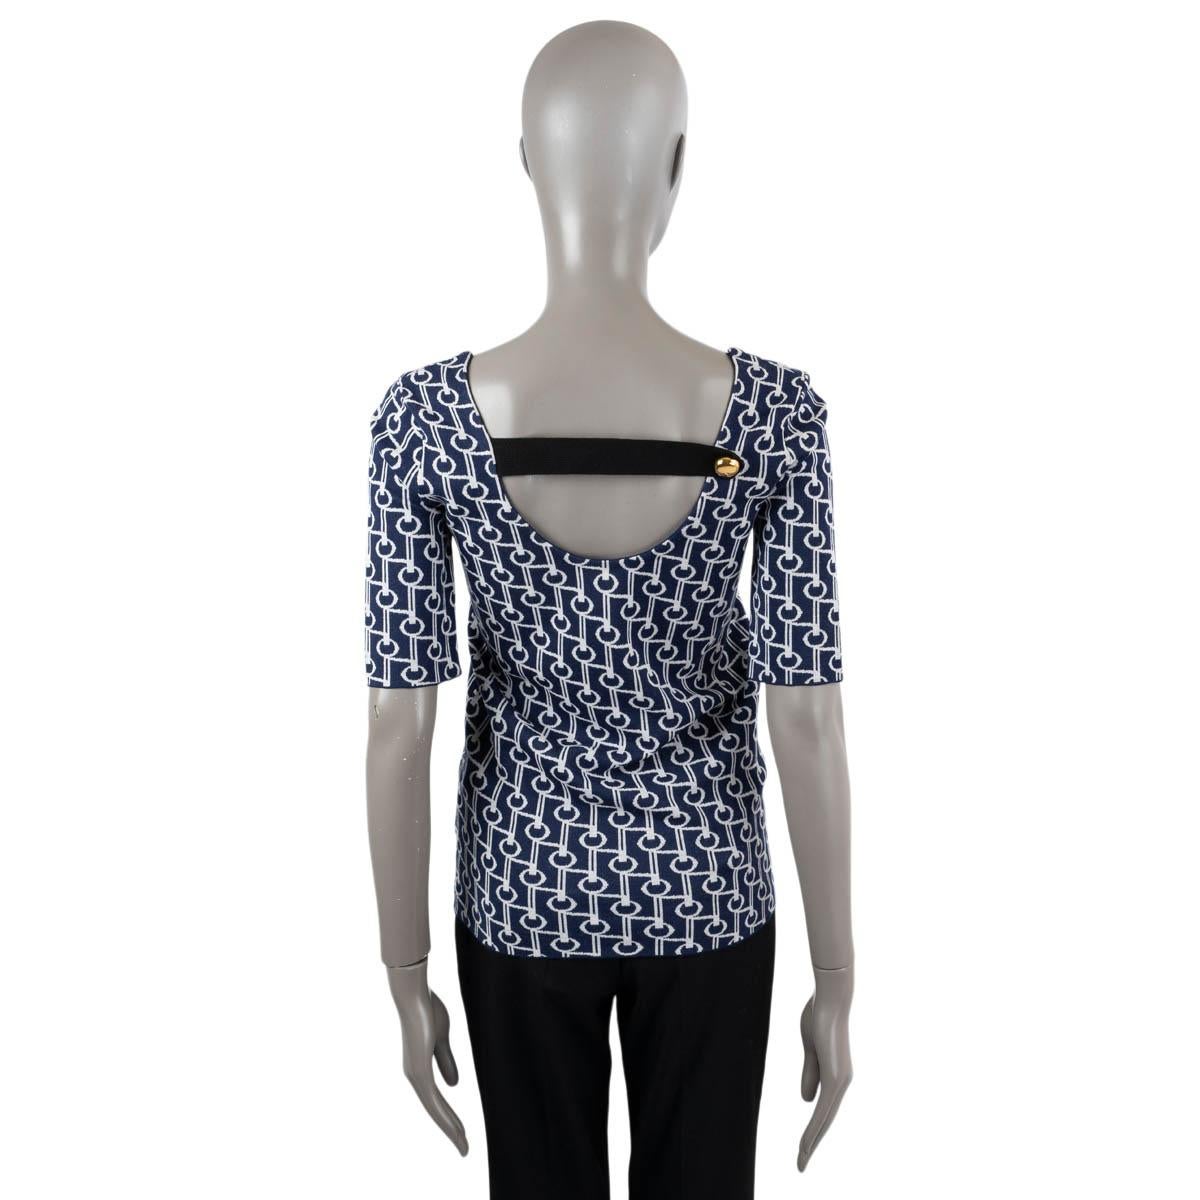 PRADA marineblaues & weißes GEOMETRIC JACQUARD KNIT Top Shirt aus Wolle 40 S Damen im Angebot